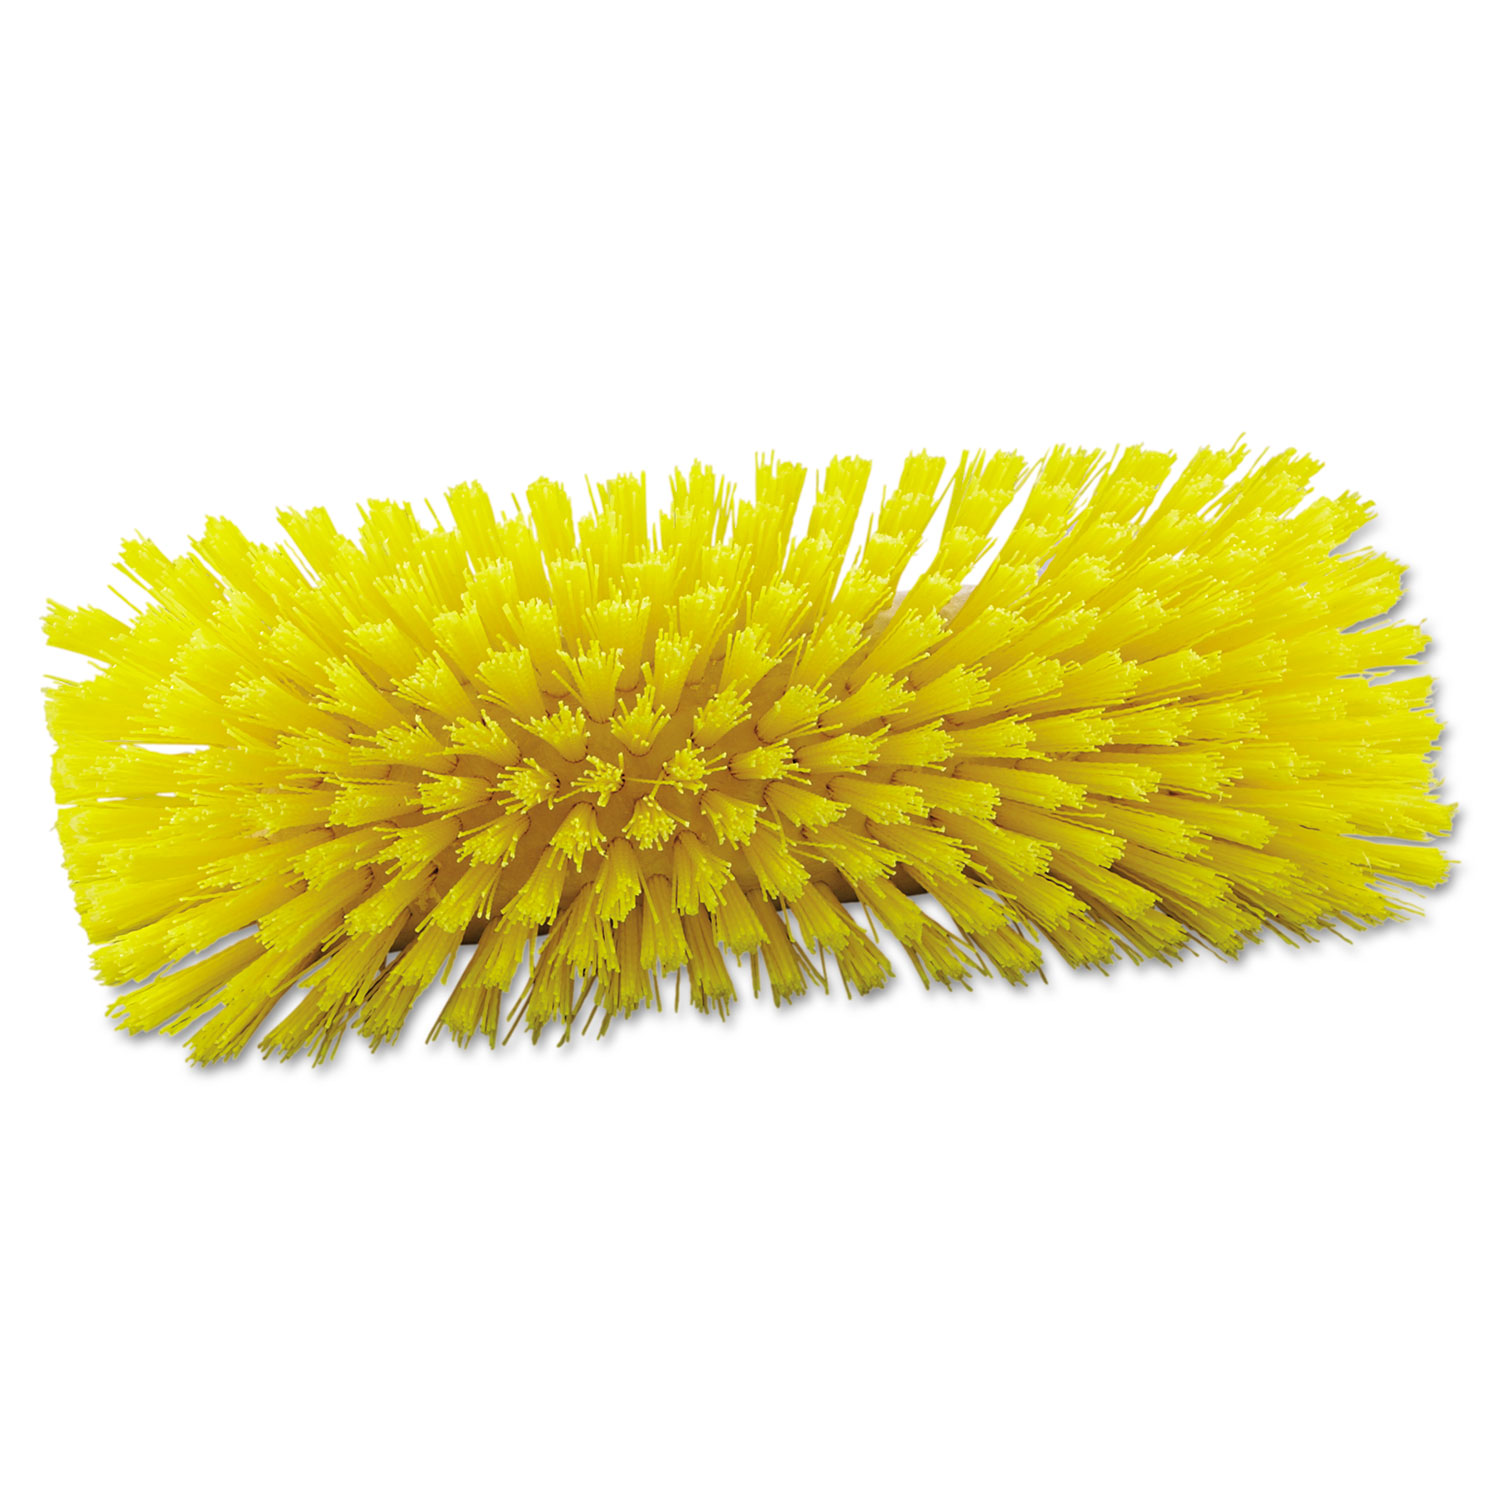 Dual-Surface Scrub Brush, Plastic Fill, 10 Long, Yellow